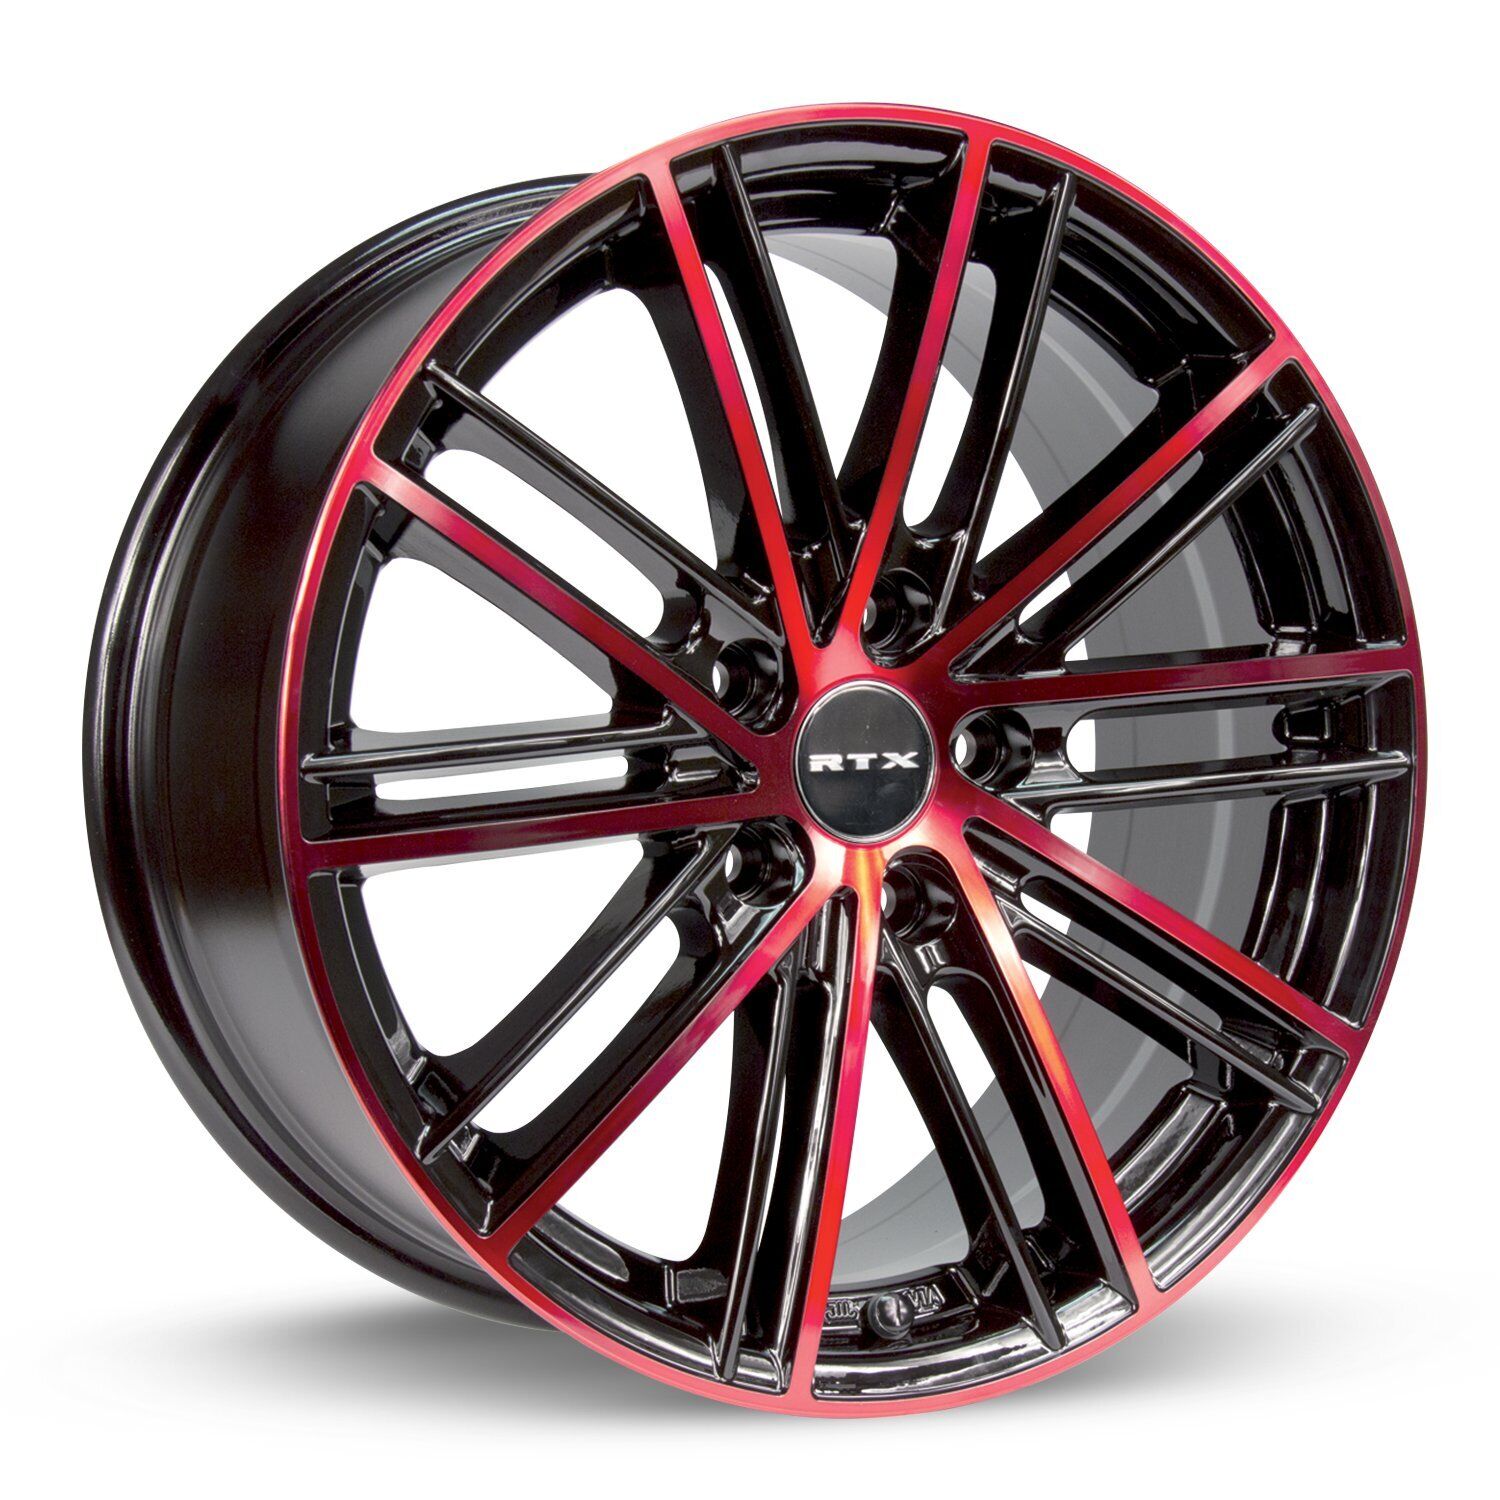 One 17 inch Wheel Rim For 2012-2014 Honda Accord Coupe RTX 081209 17x7.5 5x114.3